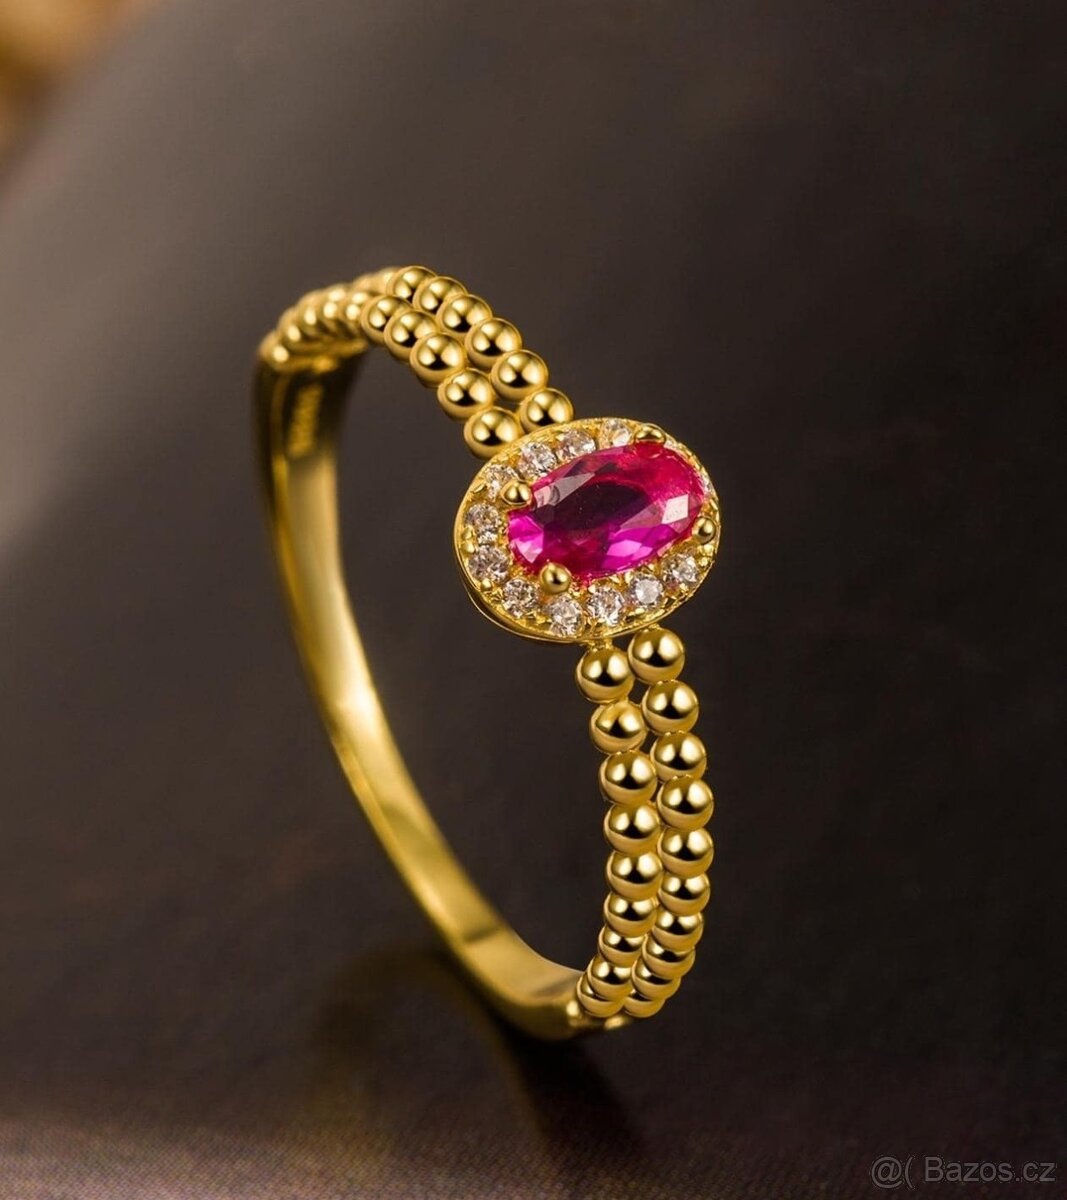 Stříbrný prsten s růžovým kamenem - Ag 925